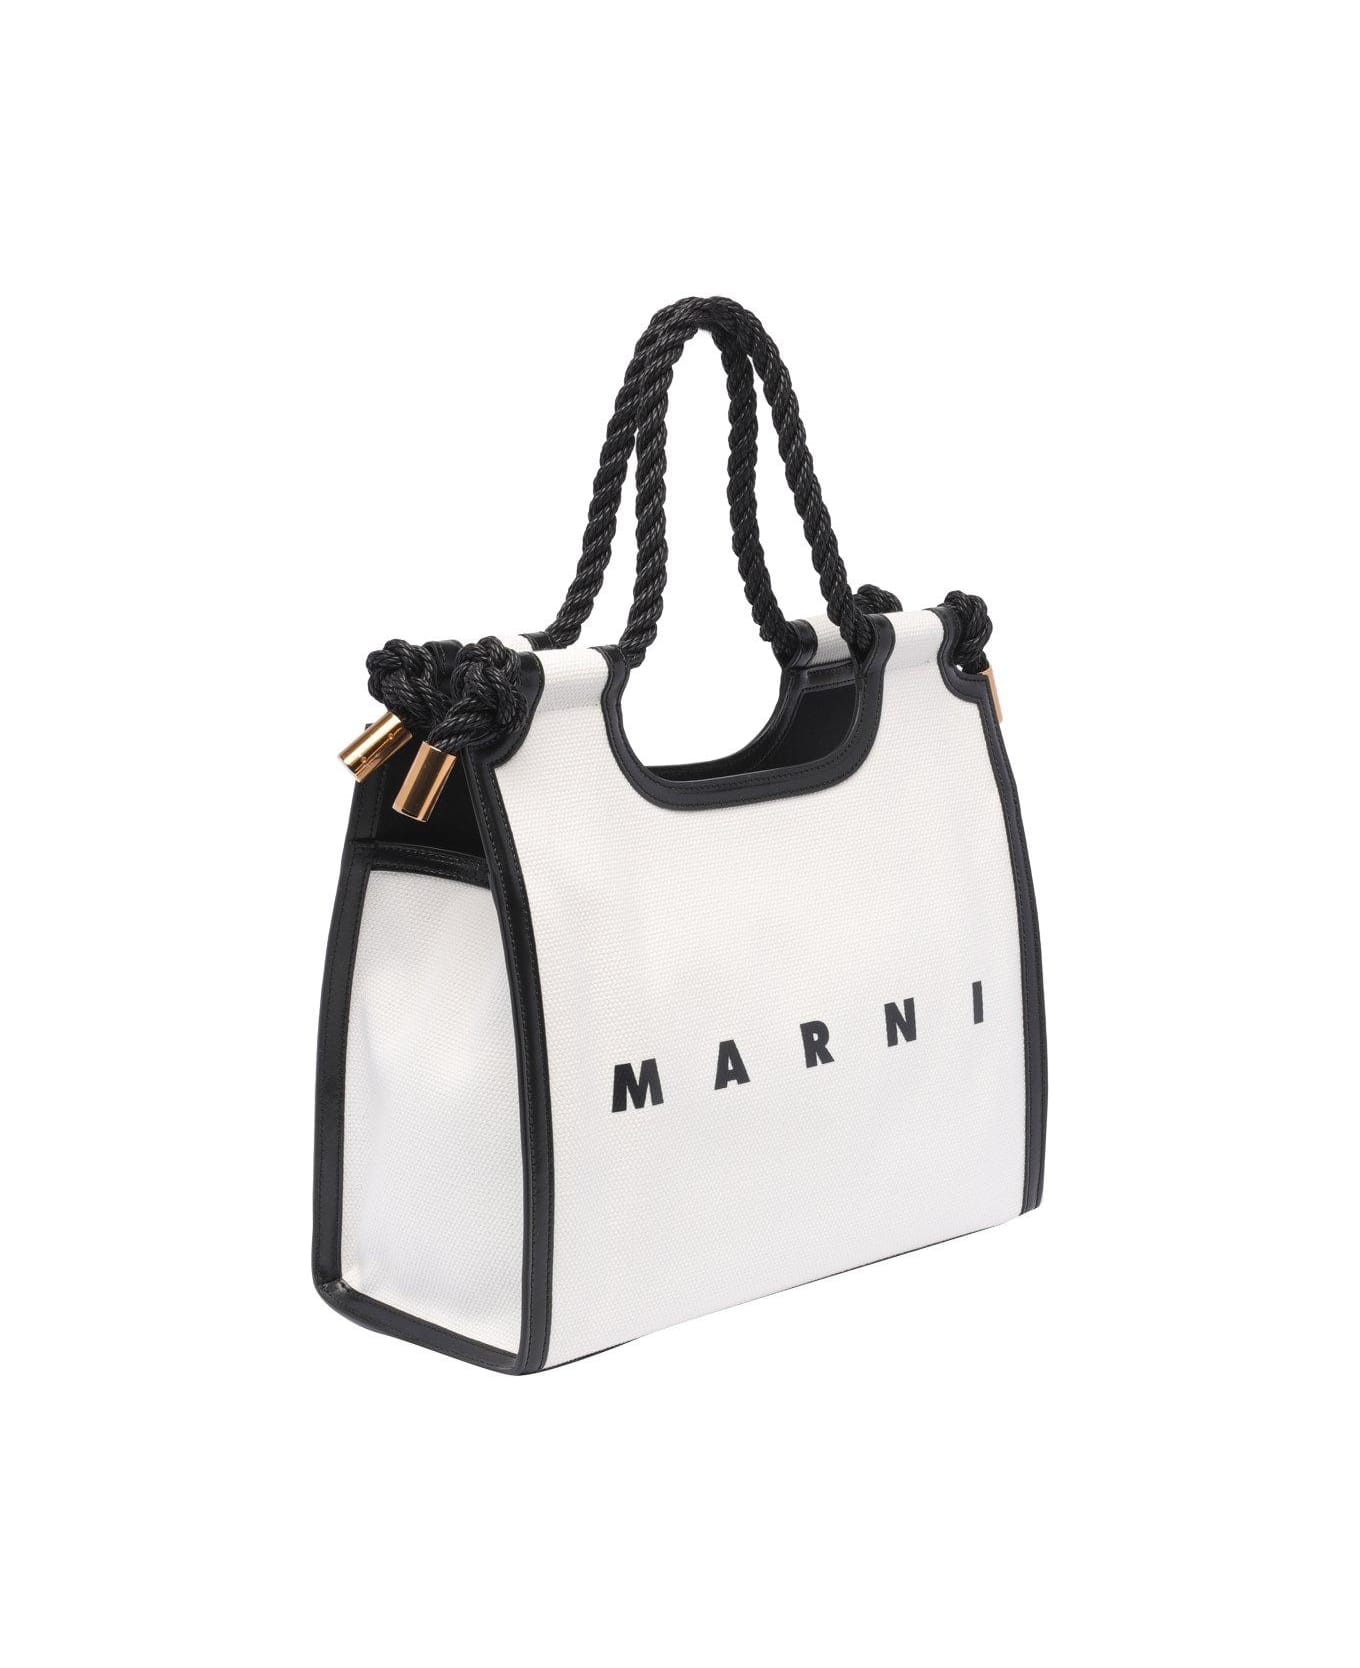 Marni Marcel Logo Printed Tote Bag - Bianco/nero